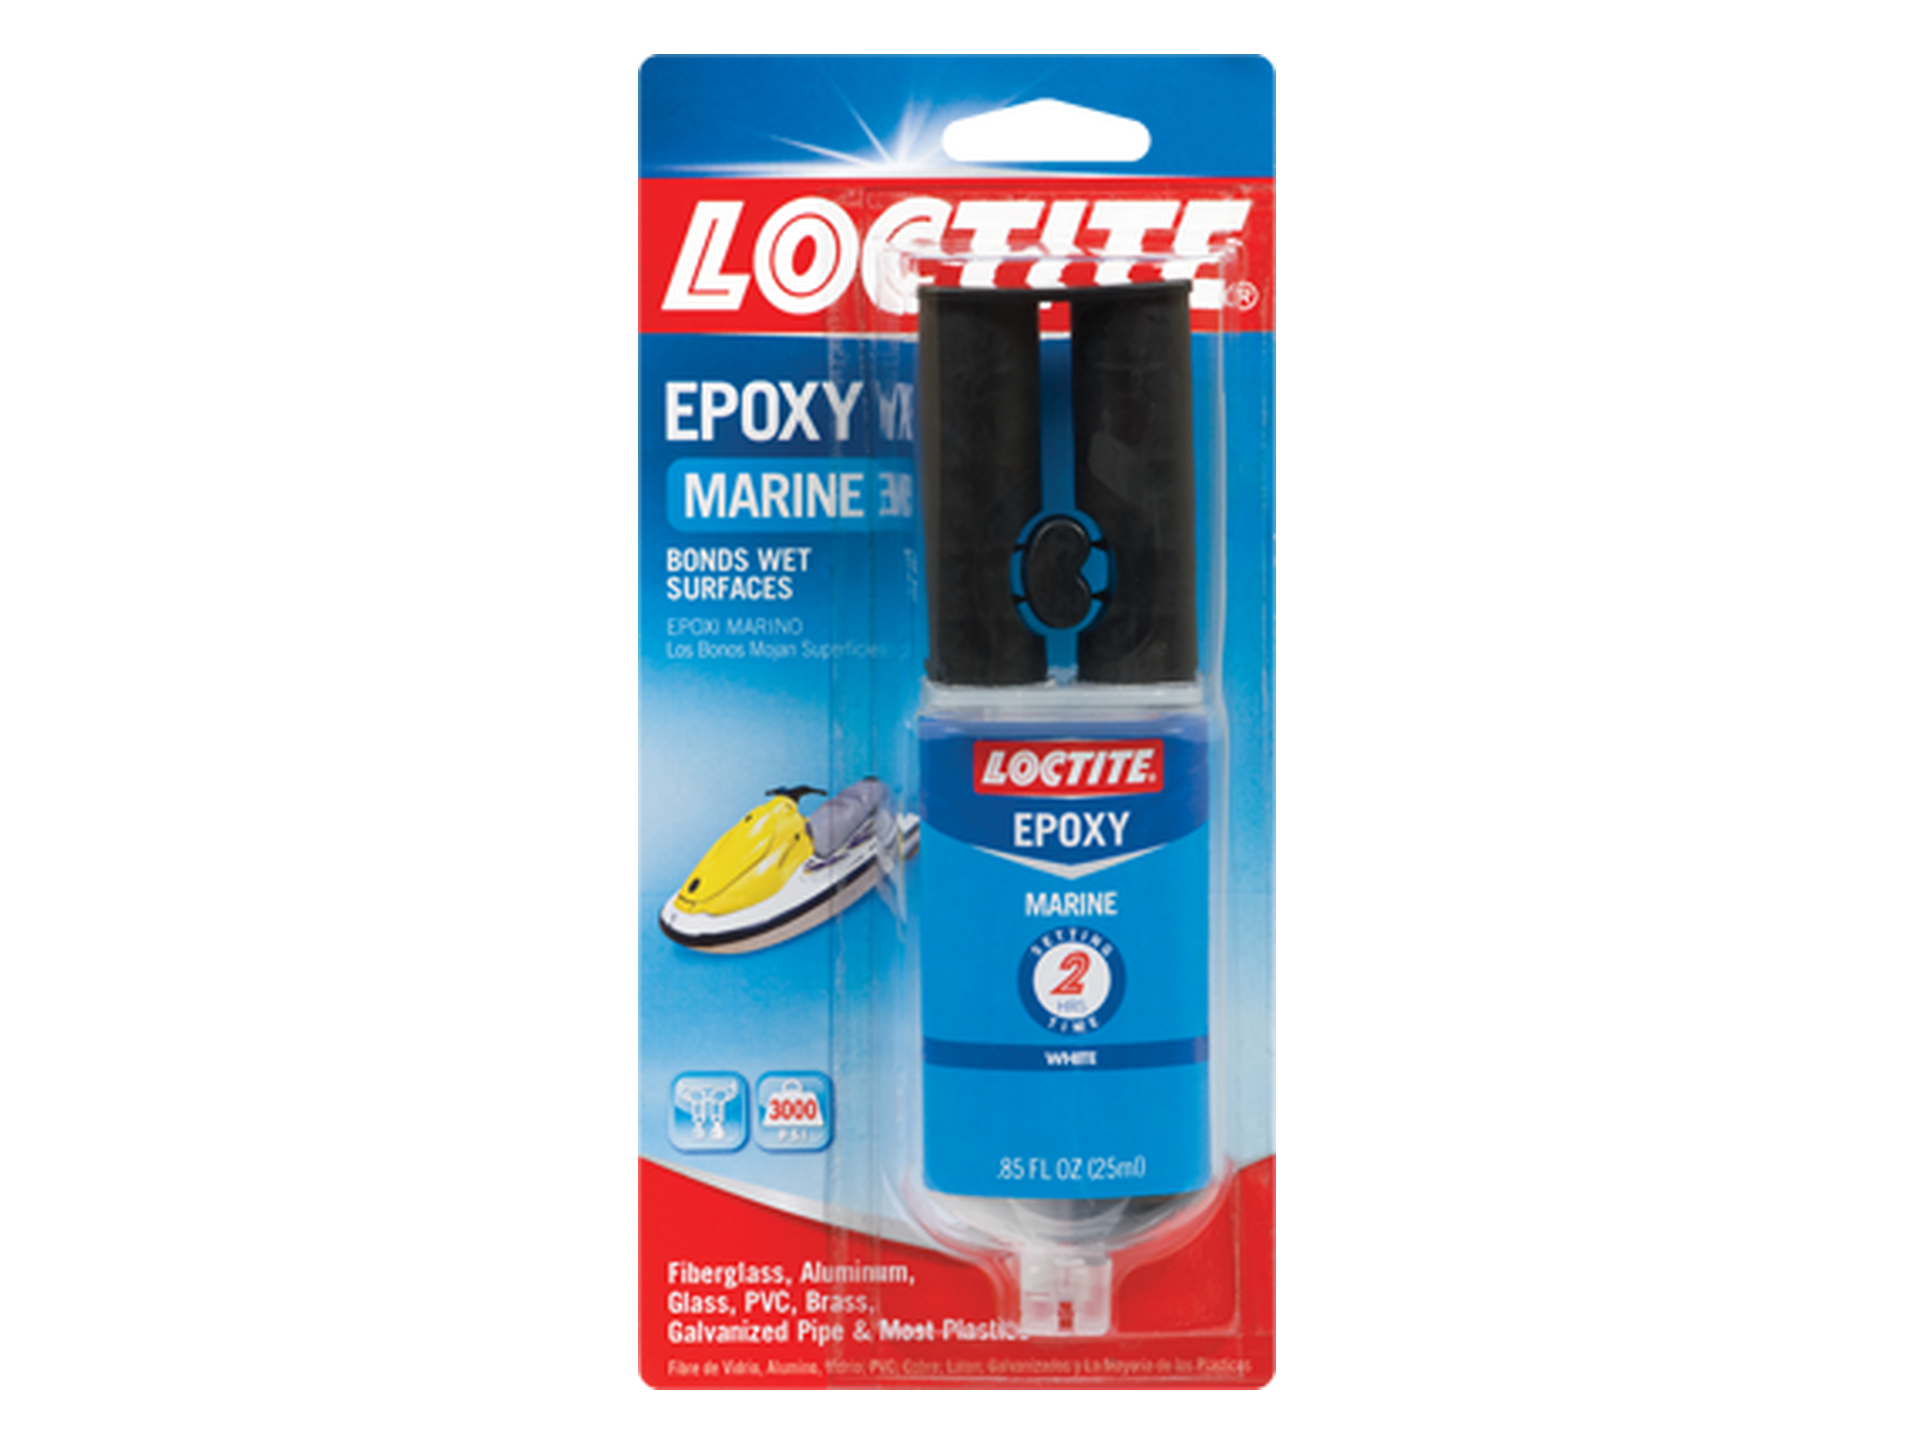 Loctite Marine Epoxy (USA ONLY)